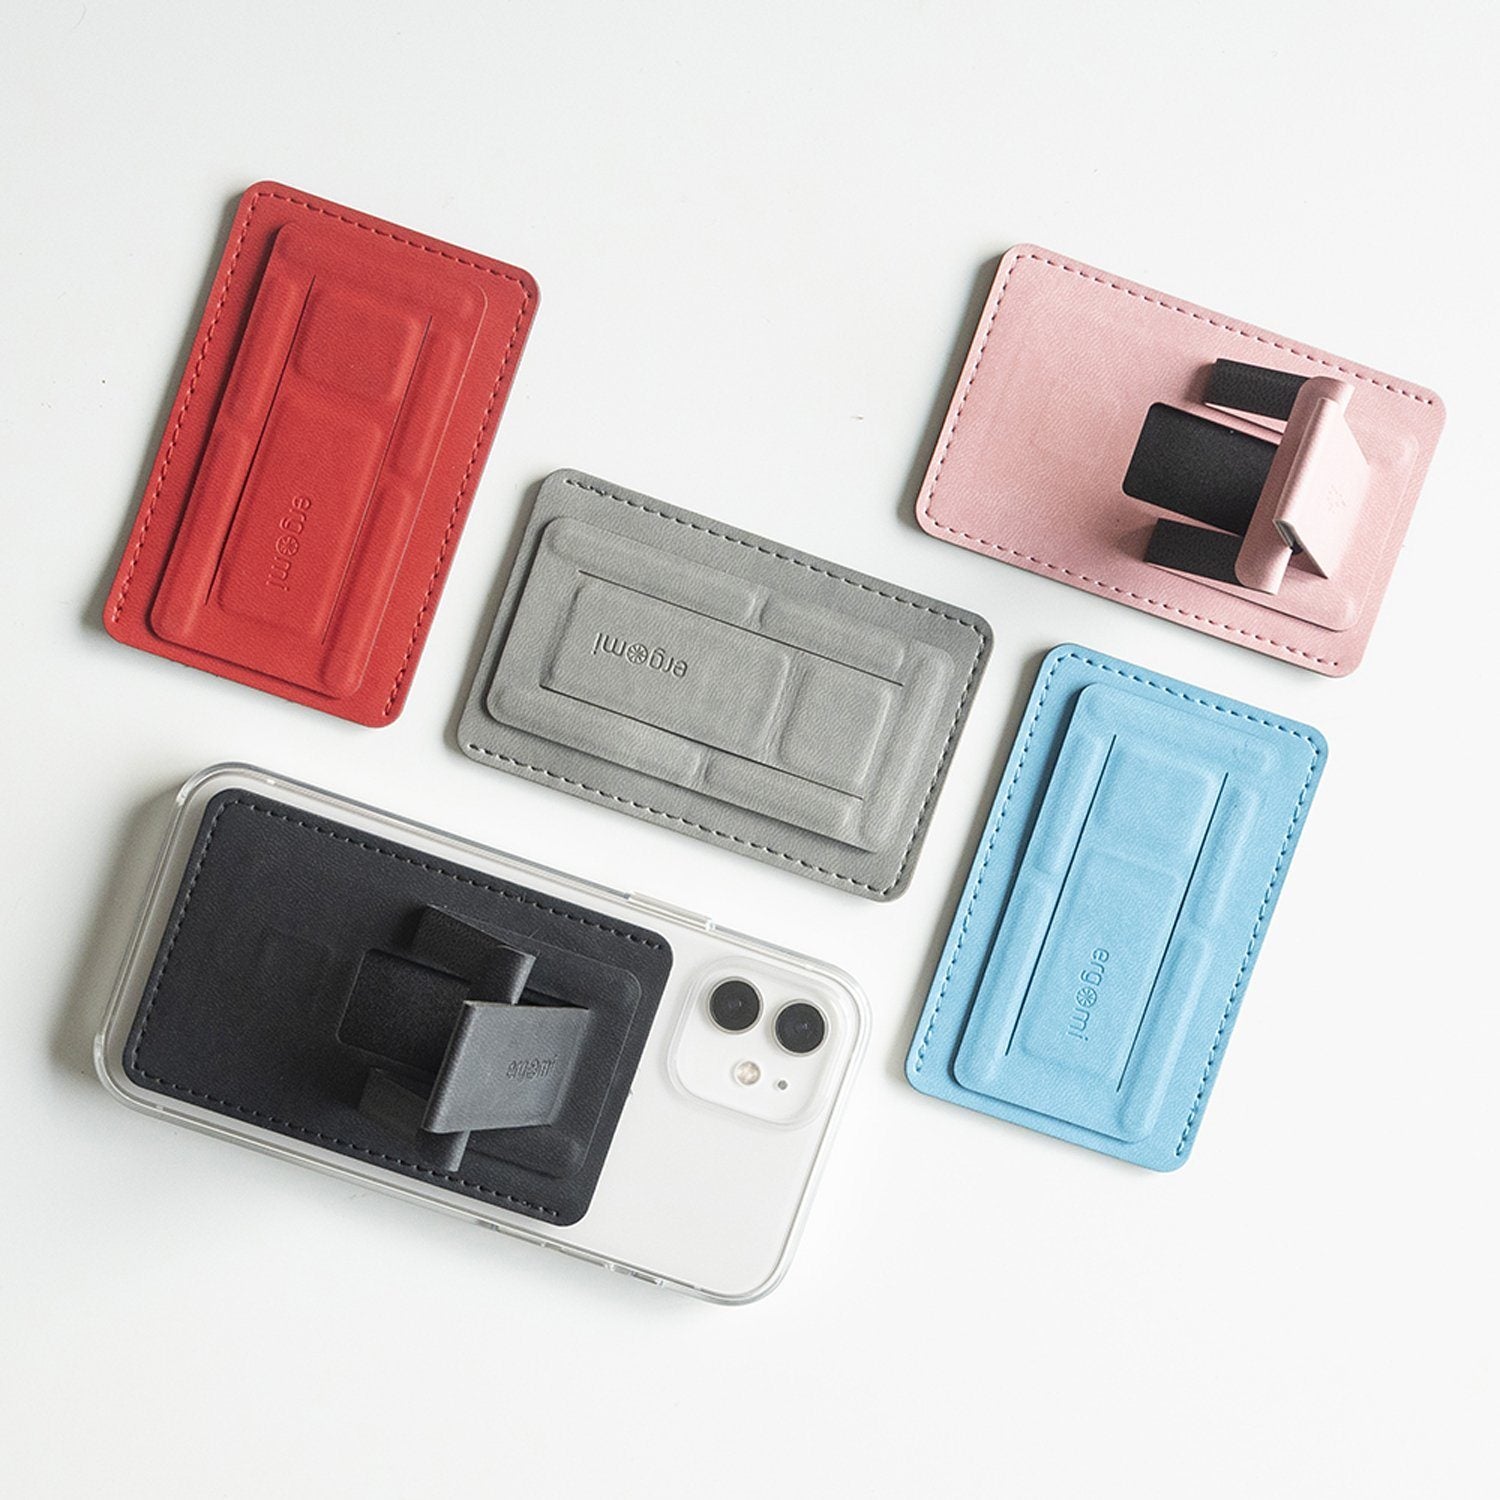 Ergomi Hercules Wallet Adhesive Cardholder Phone Stand, Black Default Ergomi 